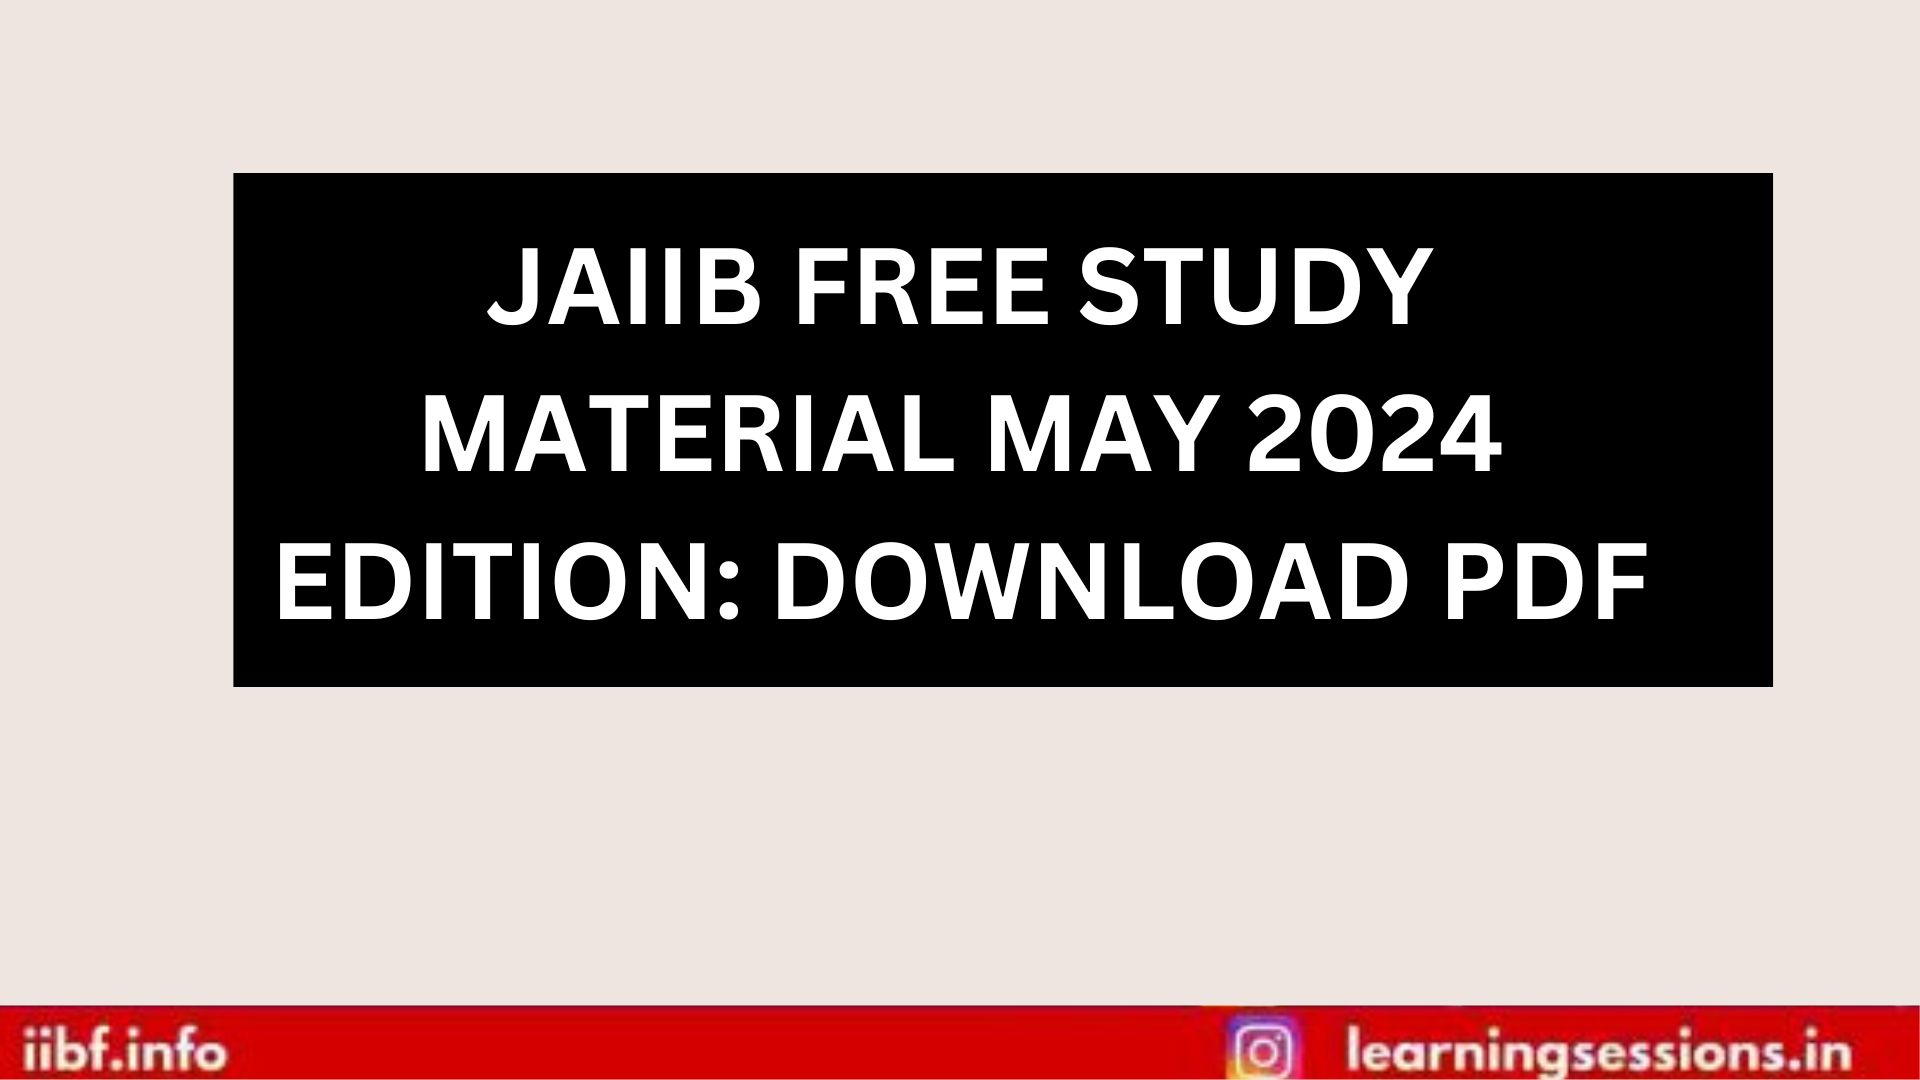 JAIIB FREE STUDY MATERIAL MAY 2024 EDITION: DOWNLOAD PDF